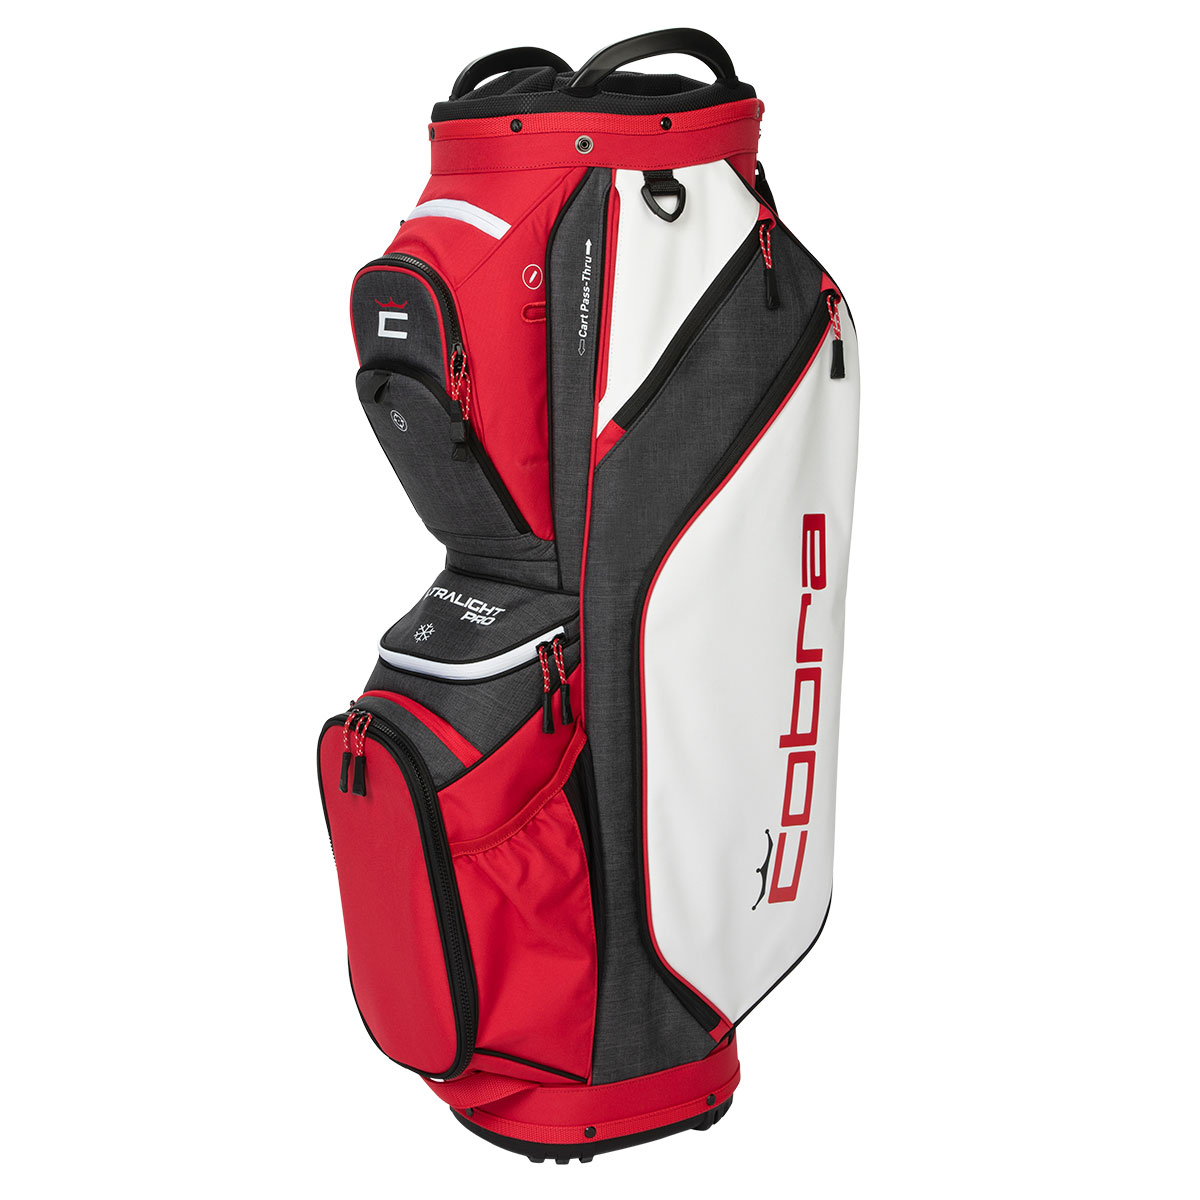 Amazoncom  Majek Ladies Teal Black Golf Bag 9 inch 14Way Friendly  Separator Top  Sports  Outdoors